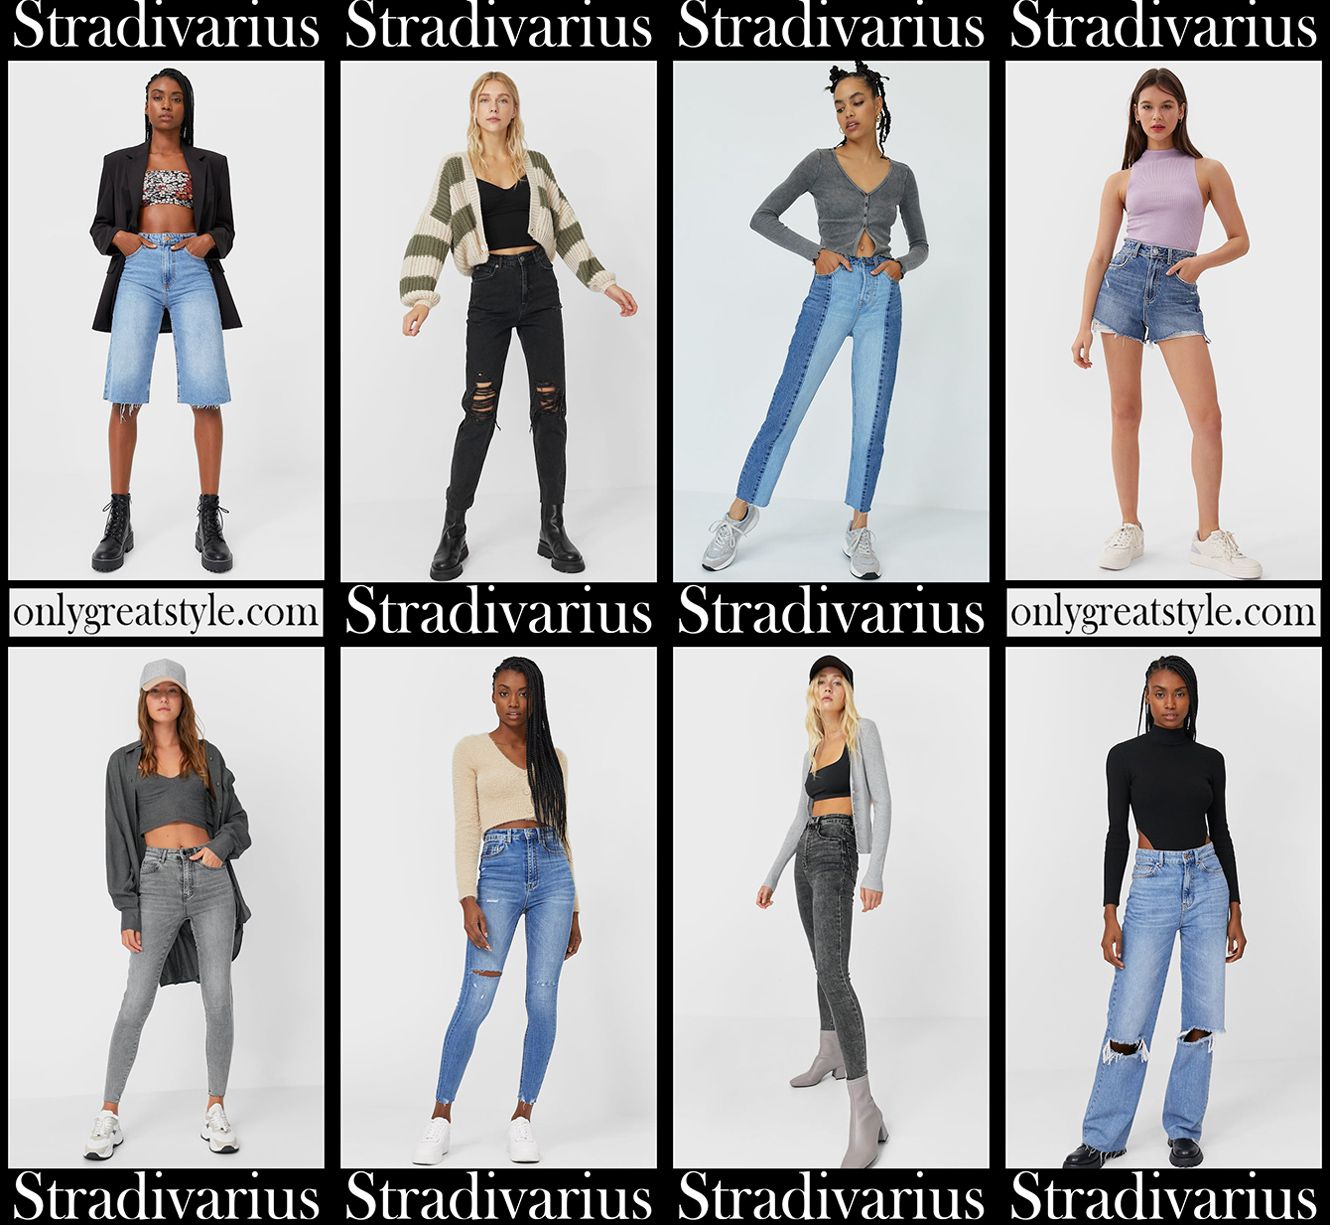 Stradivarius jeans 2021 new arrivals womens clothing